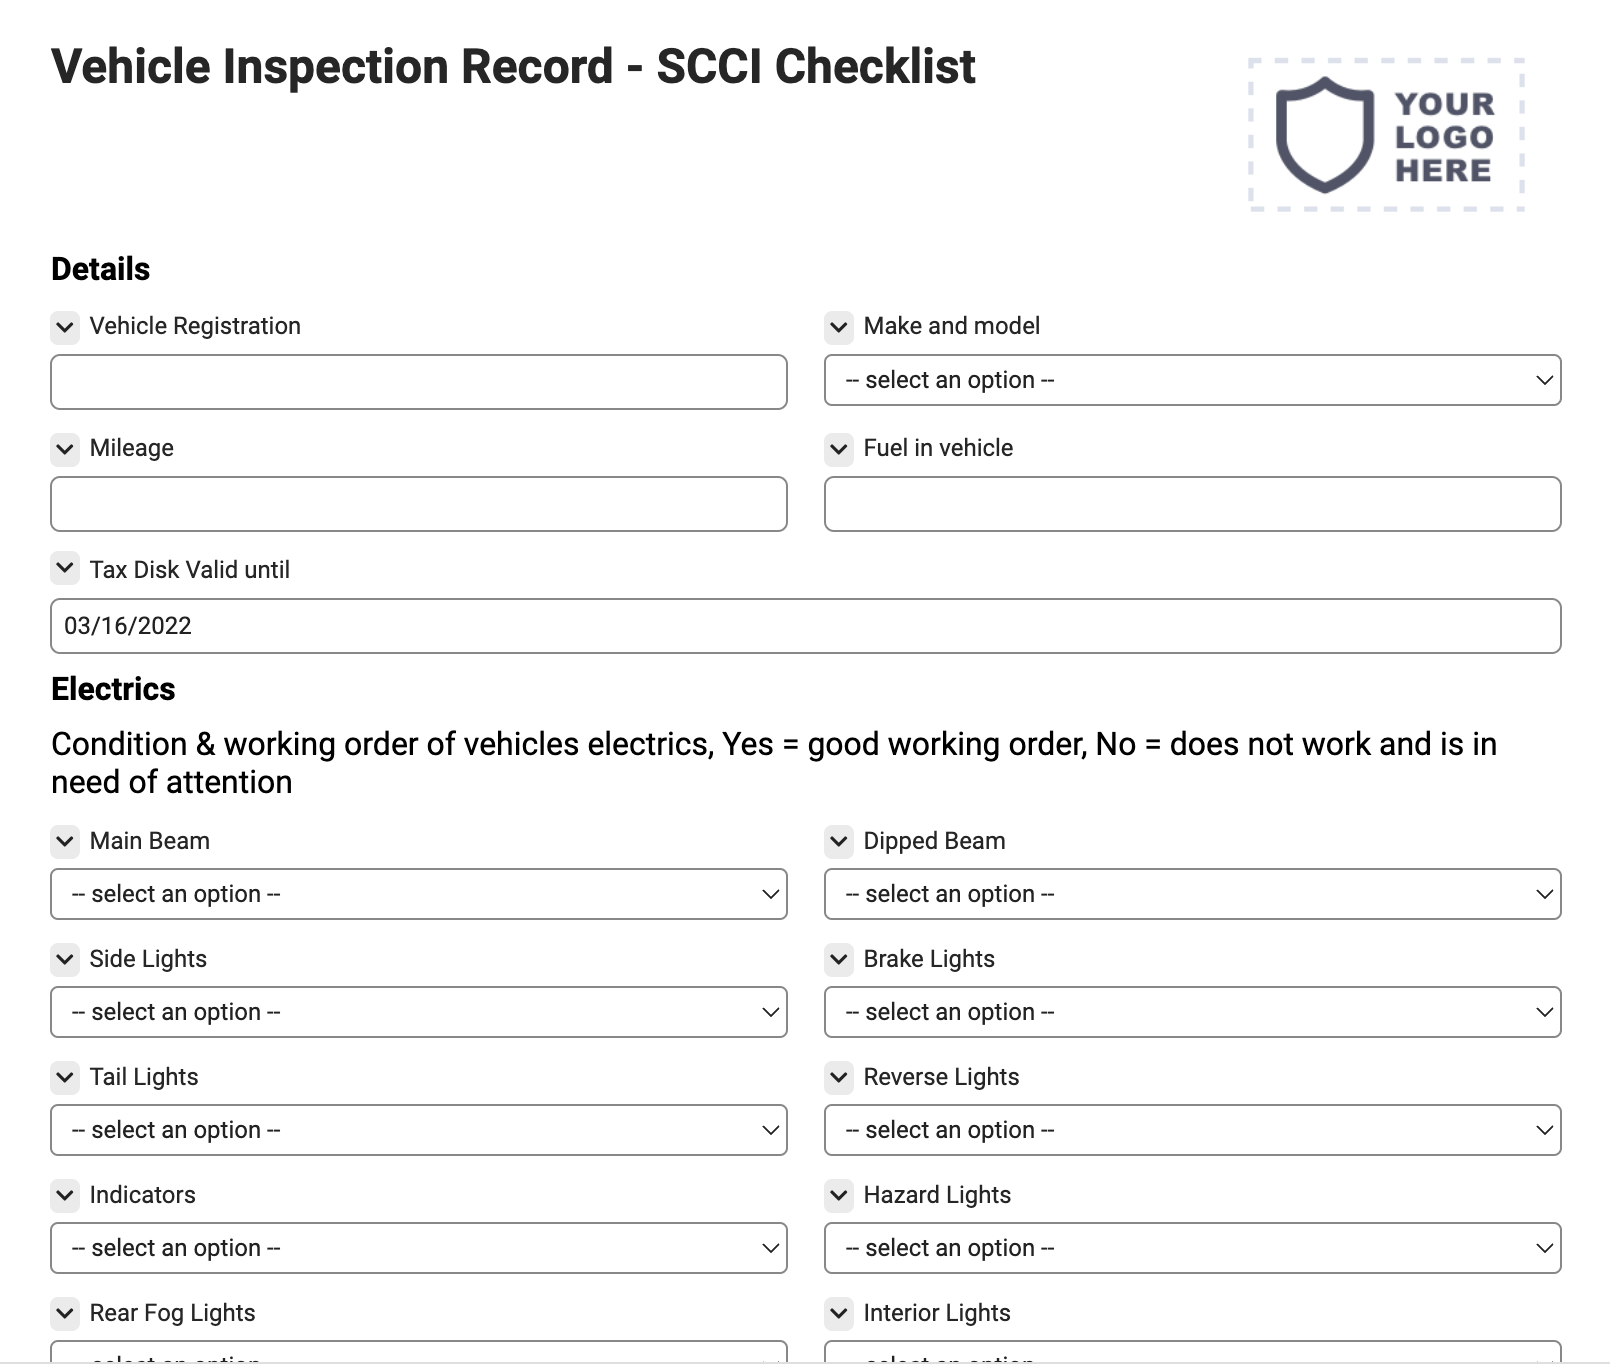 Vehicle Inspection Record - SCCI Checklist